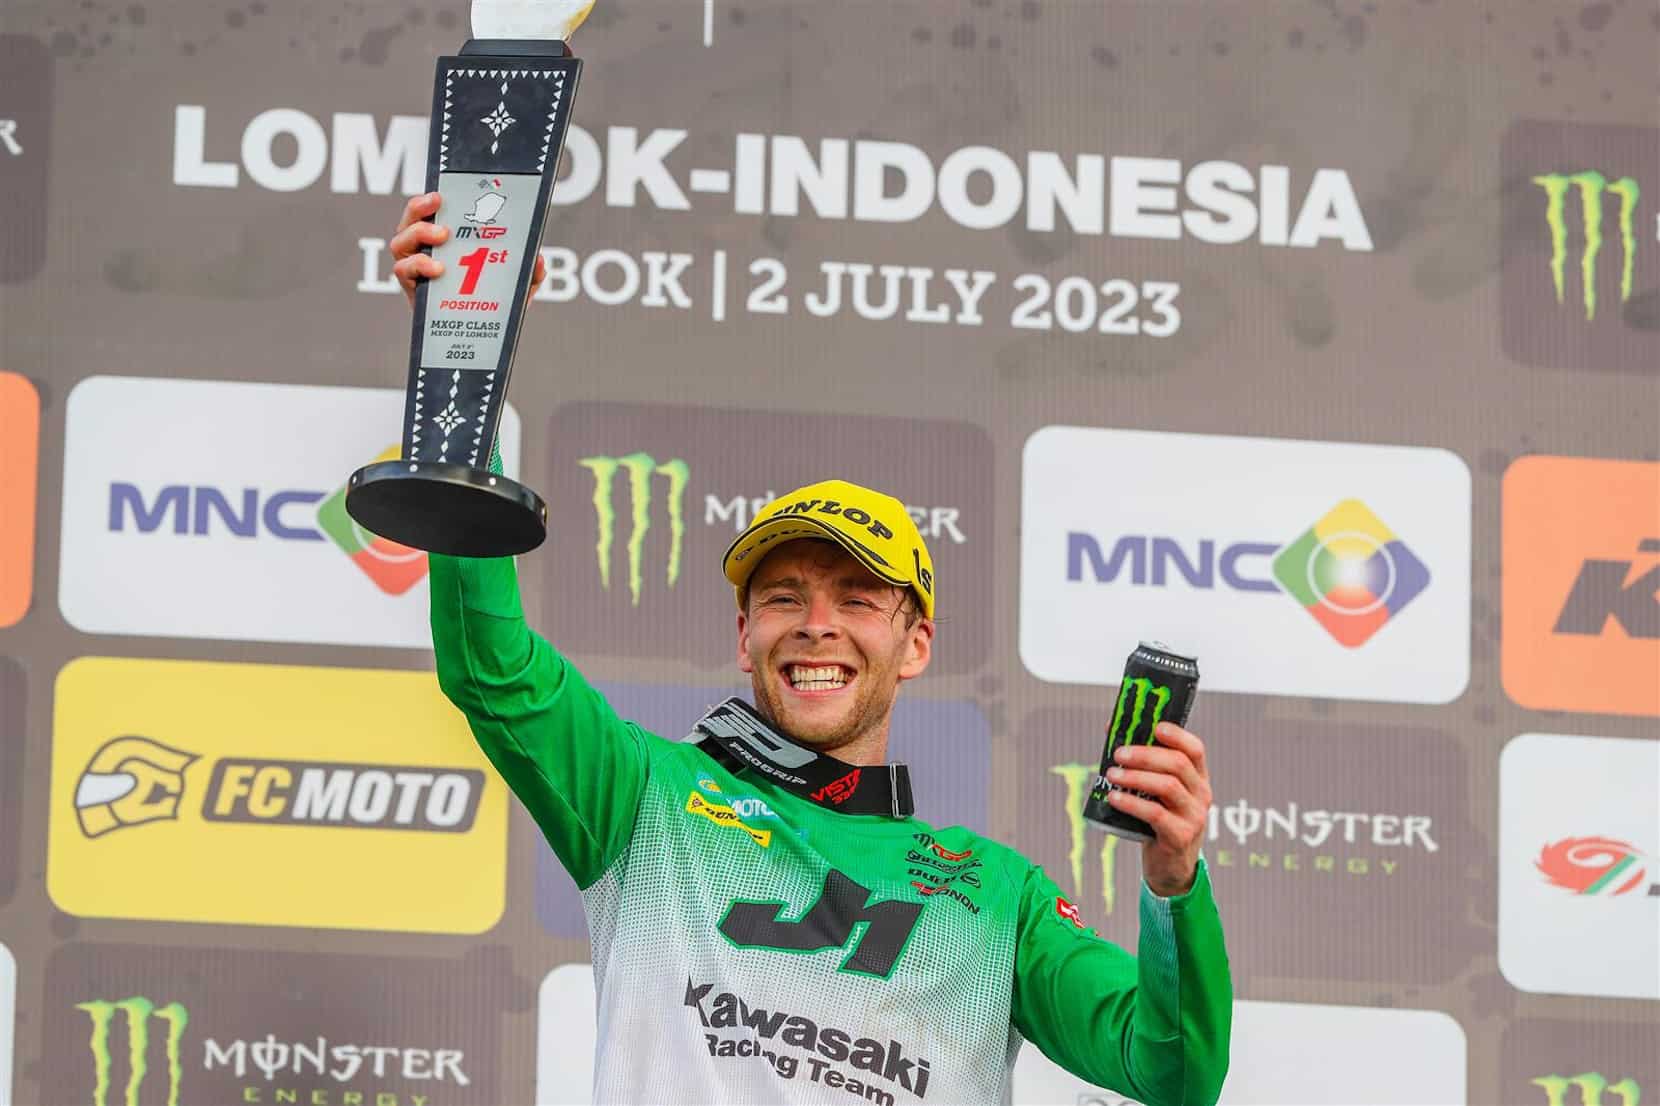 Erneuter Triumph für Kawasaki in Lombok